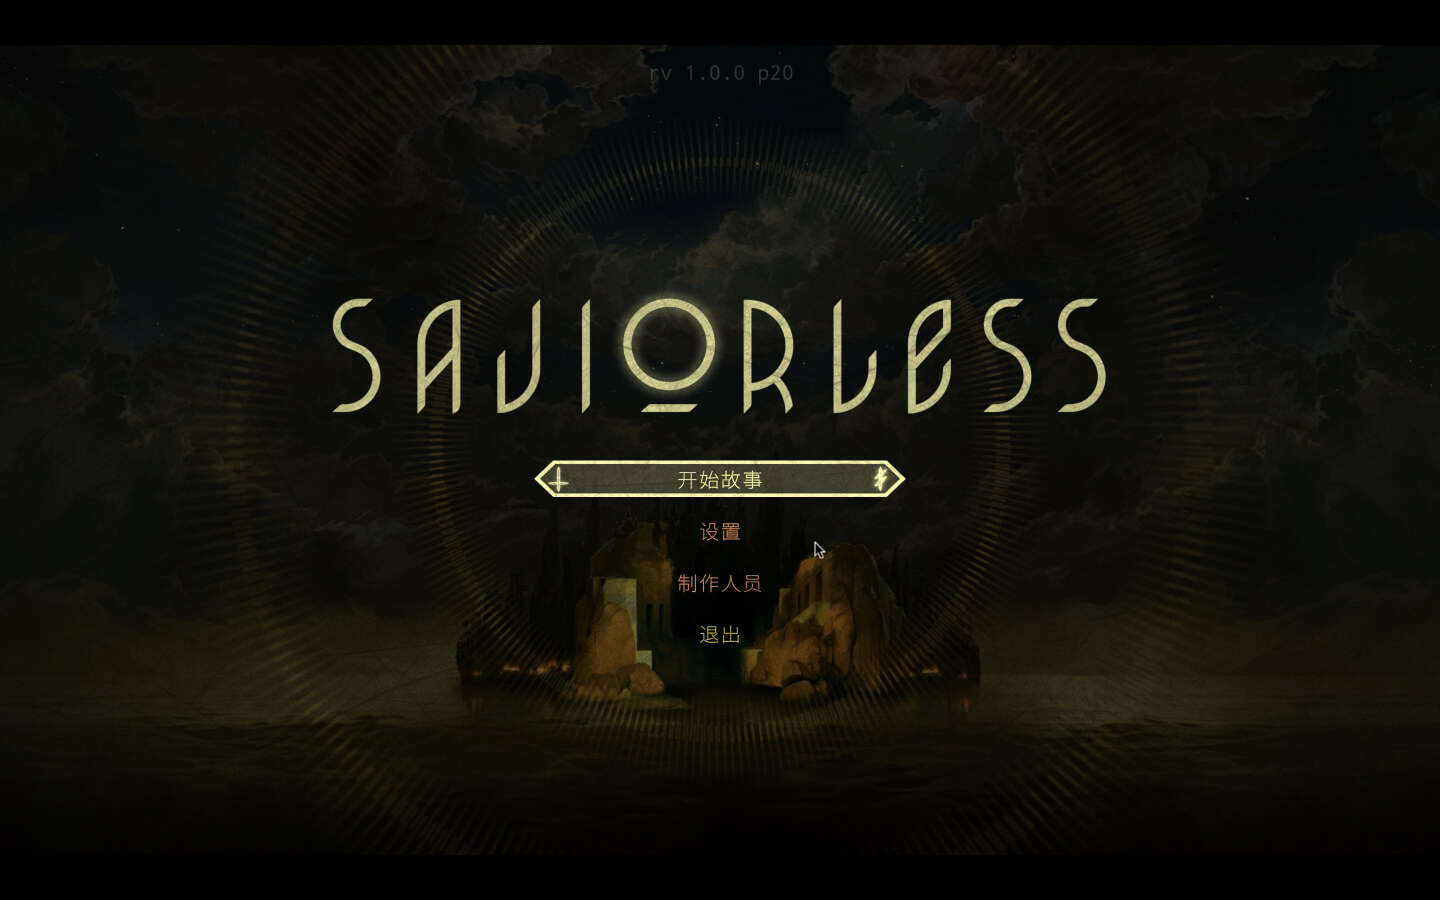 破灭 Saviorless for Mac v1.0.0.p20 中文原生版-1